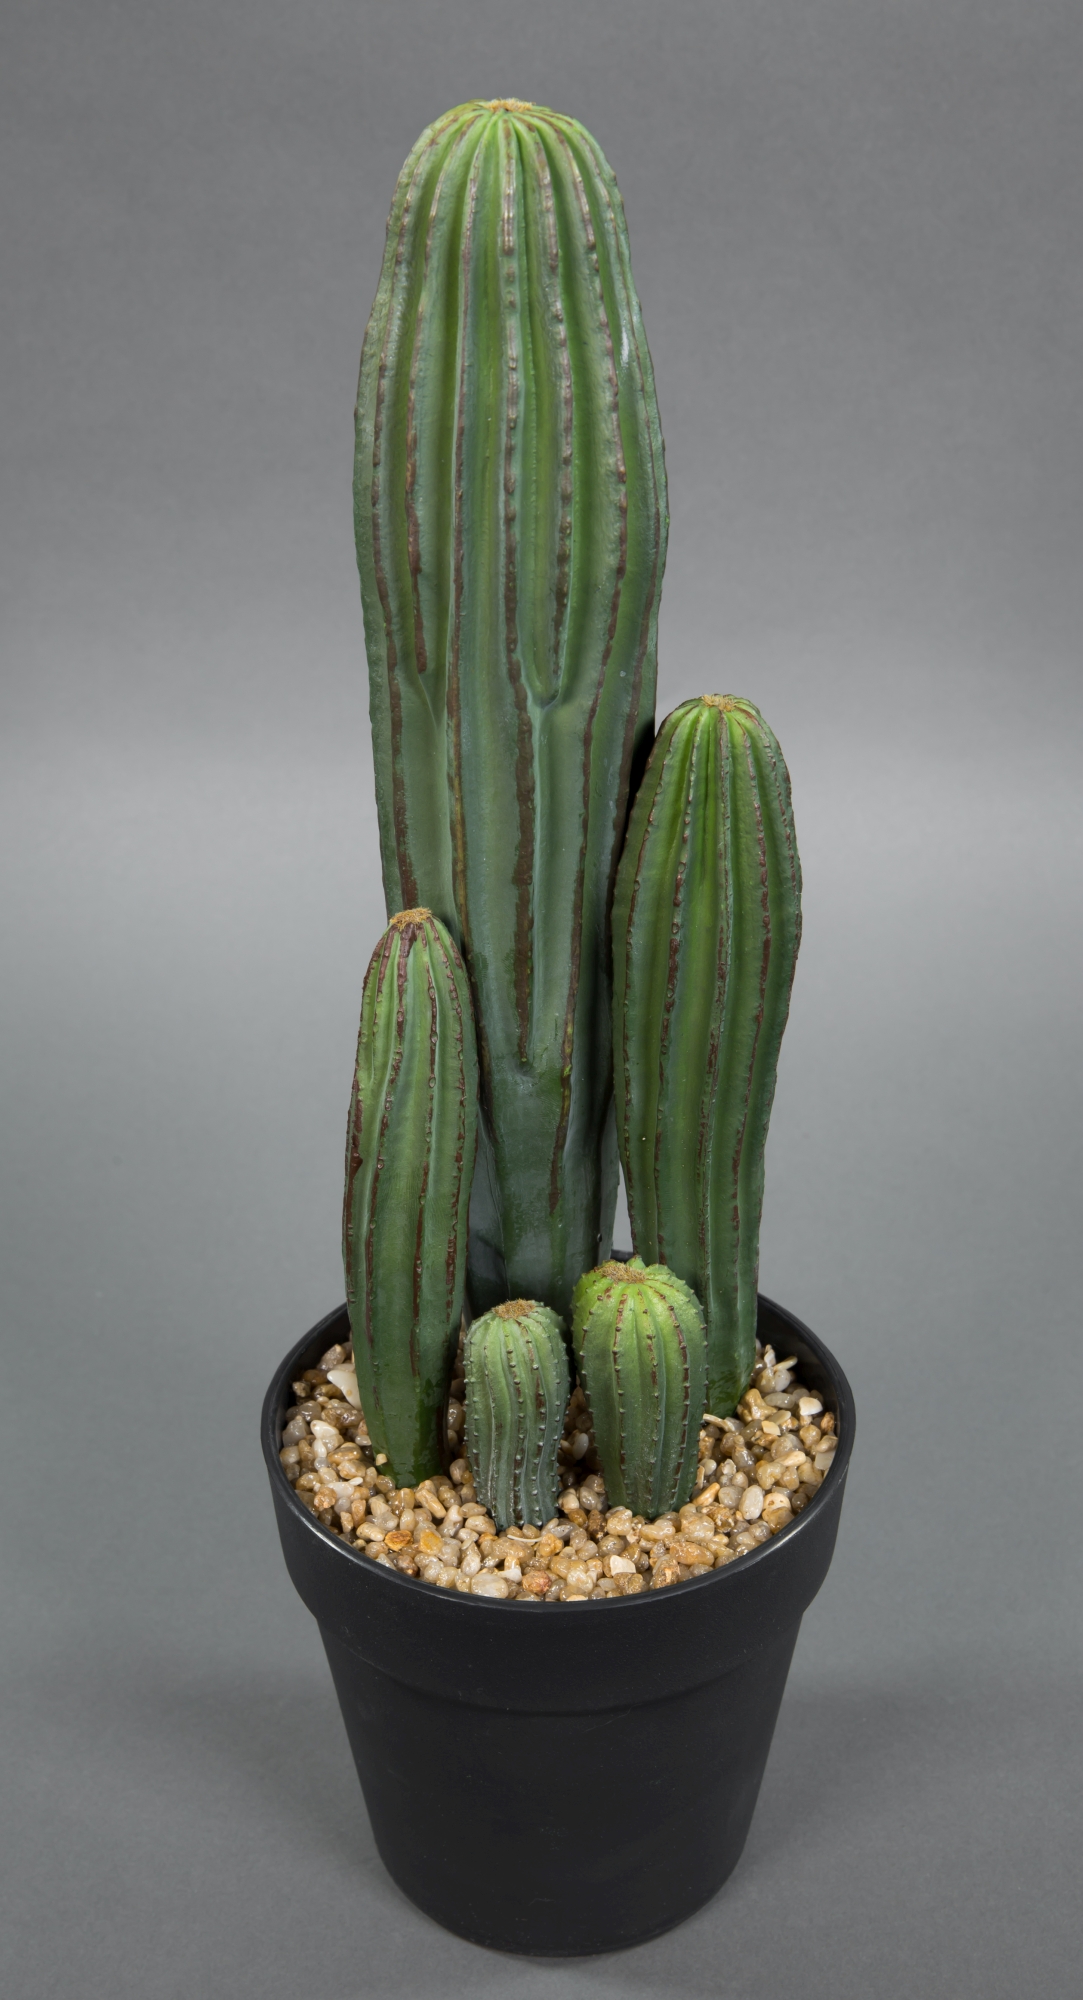 Säulenkaktus 42cm im Topf DP Kunstpflanzen künstliche Kakteen Pflanzen künstlicher Kaktus